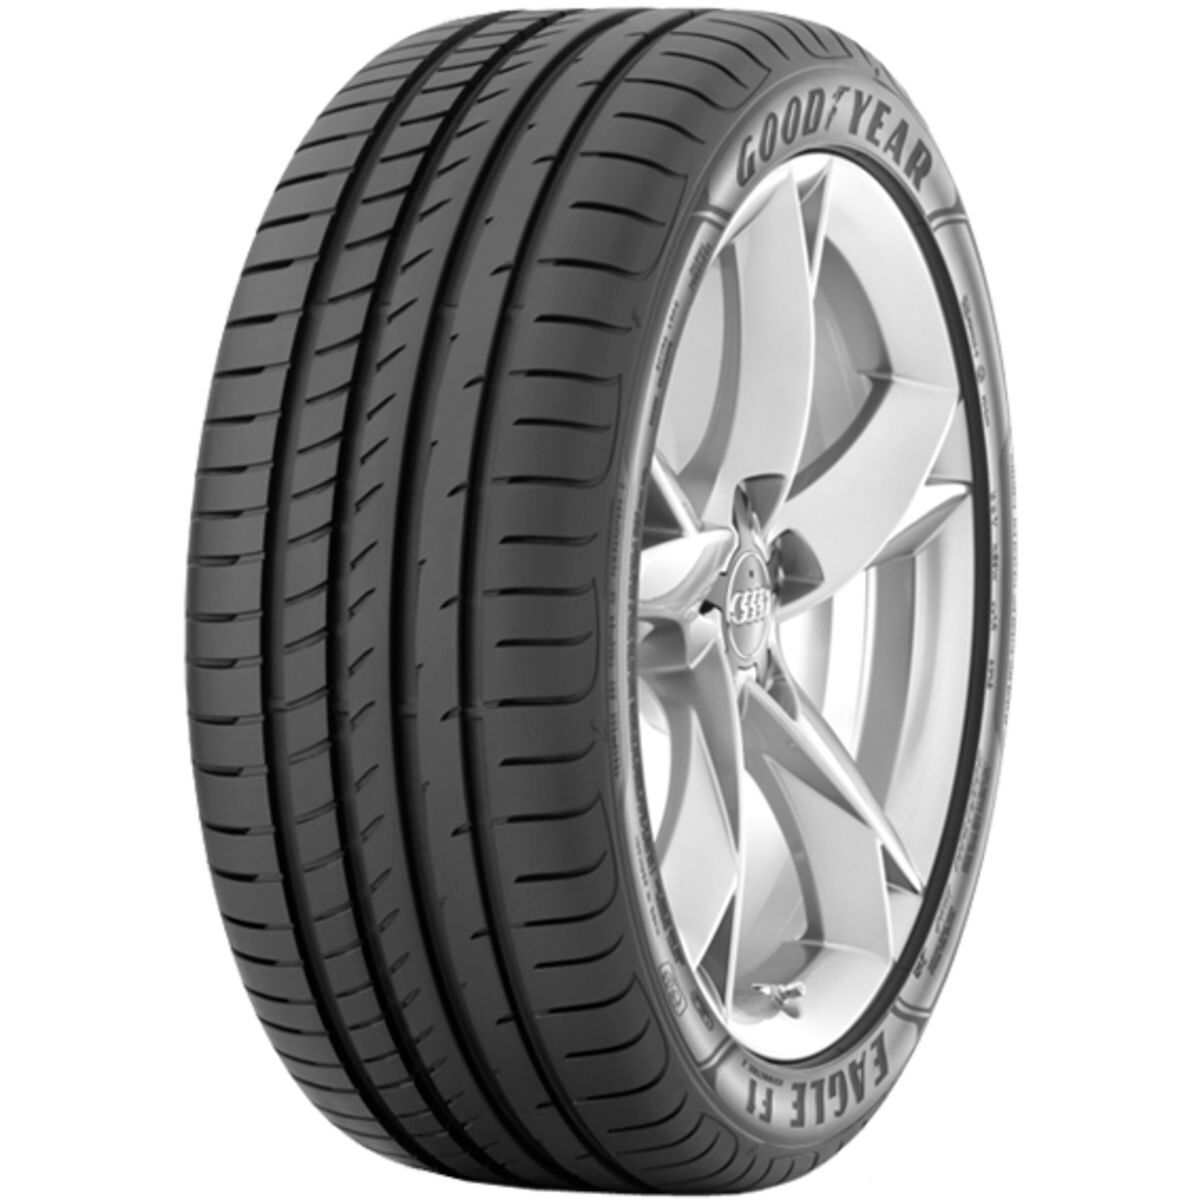 Neumáticos de verano GOODYEAR Eagle F1 Asymmetric 2 245/35R18 88Y